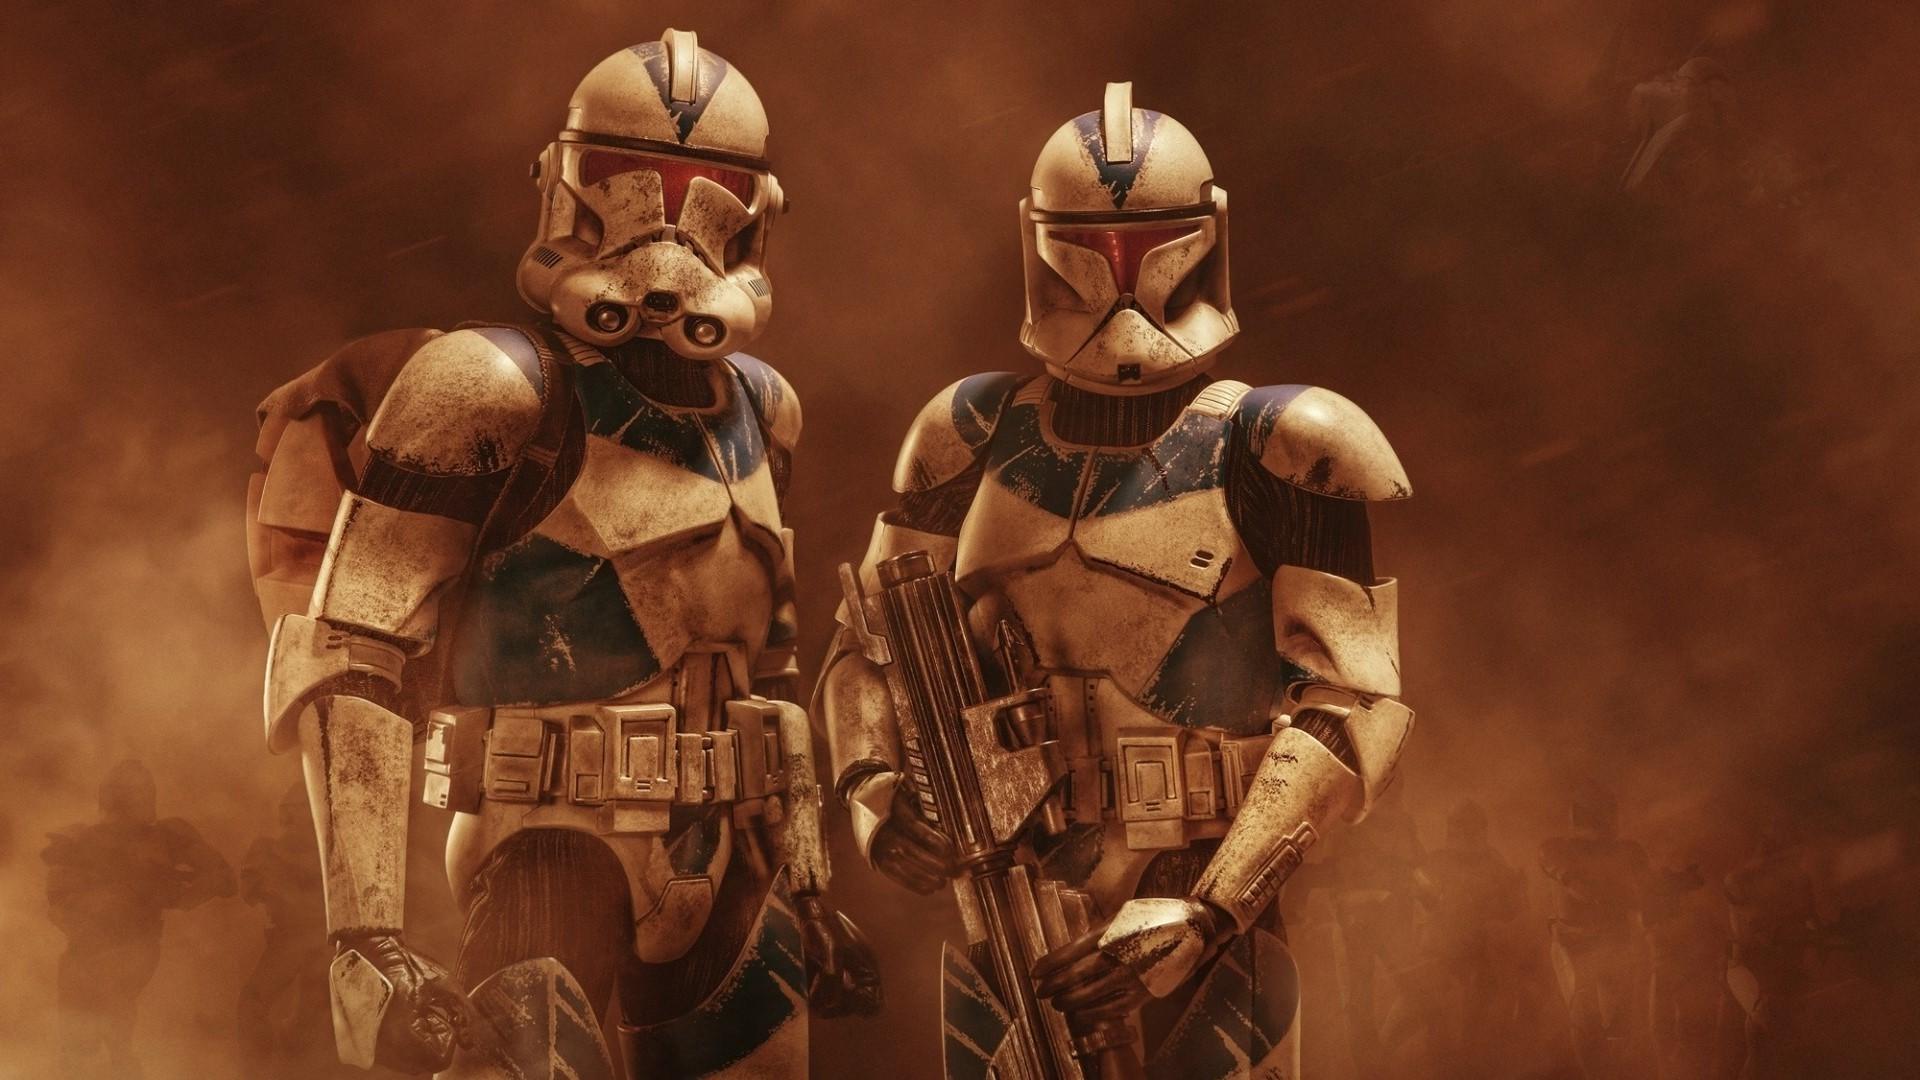 Clone Trooper Wallpaper background picture